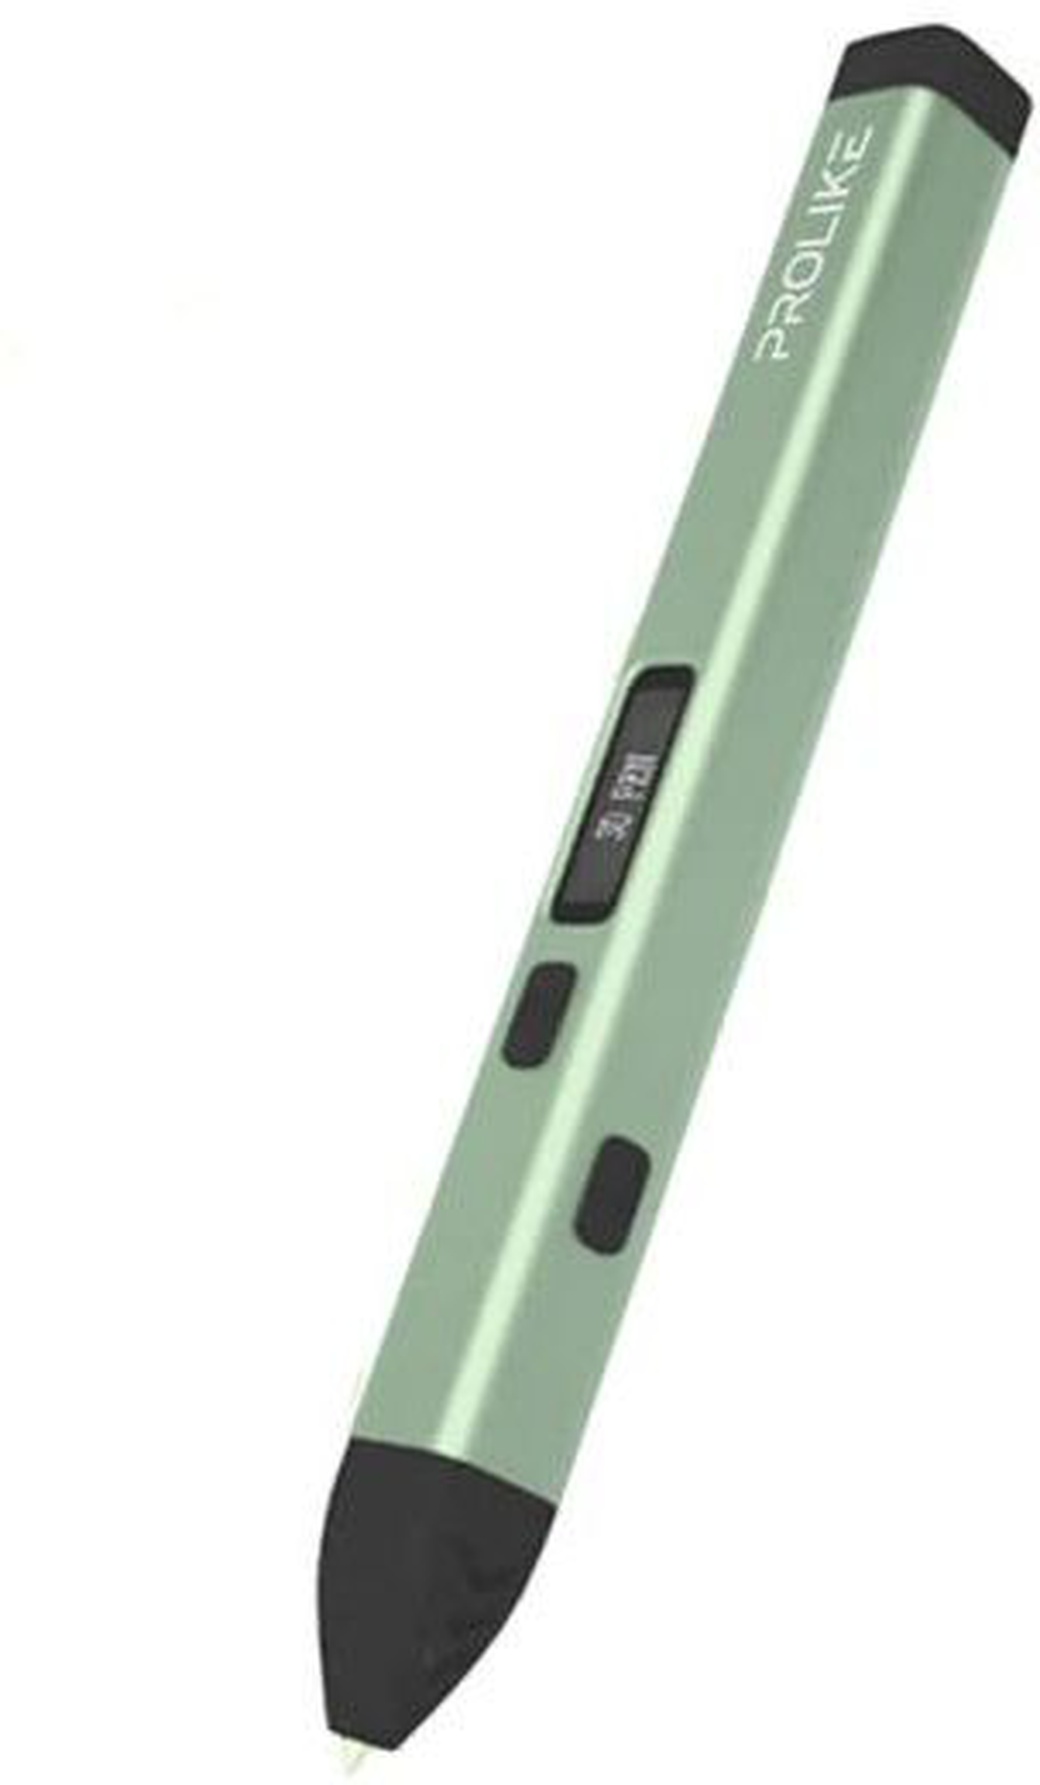 3D ручка Prolike с дисплеем, цвет зеленый фото